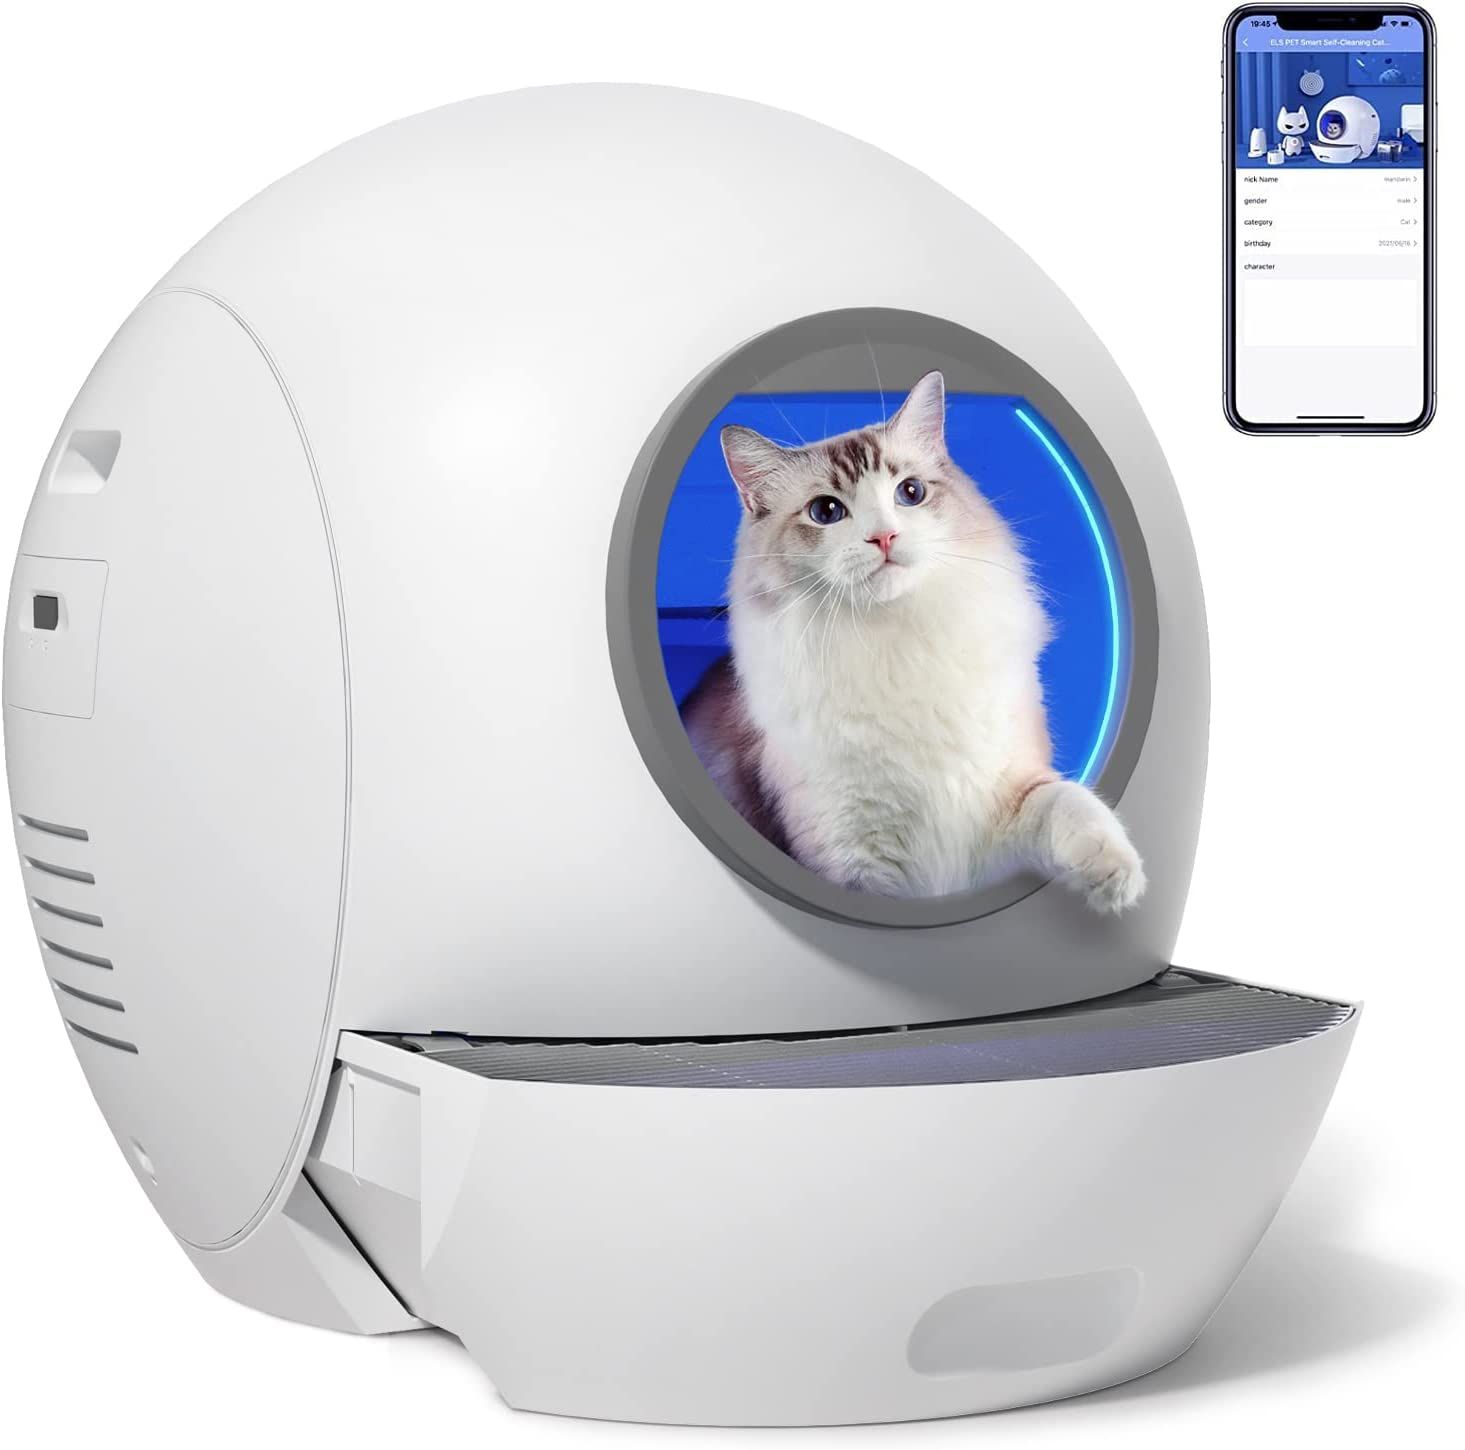 KungFuPet Self-Cleaning Cat Litter Box